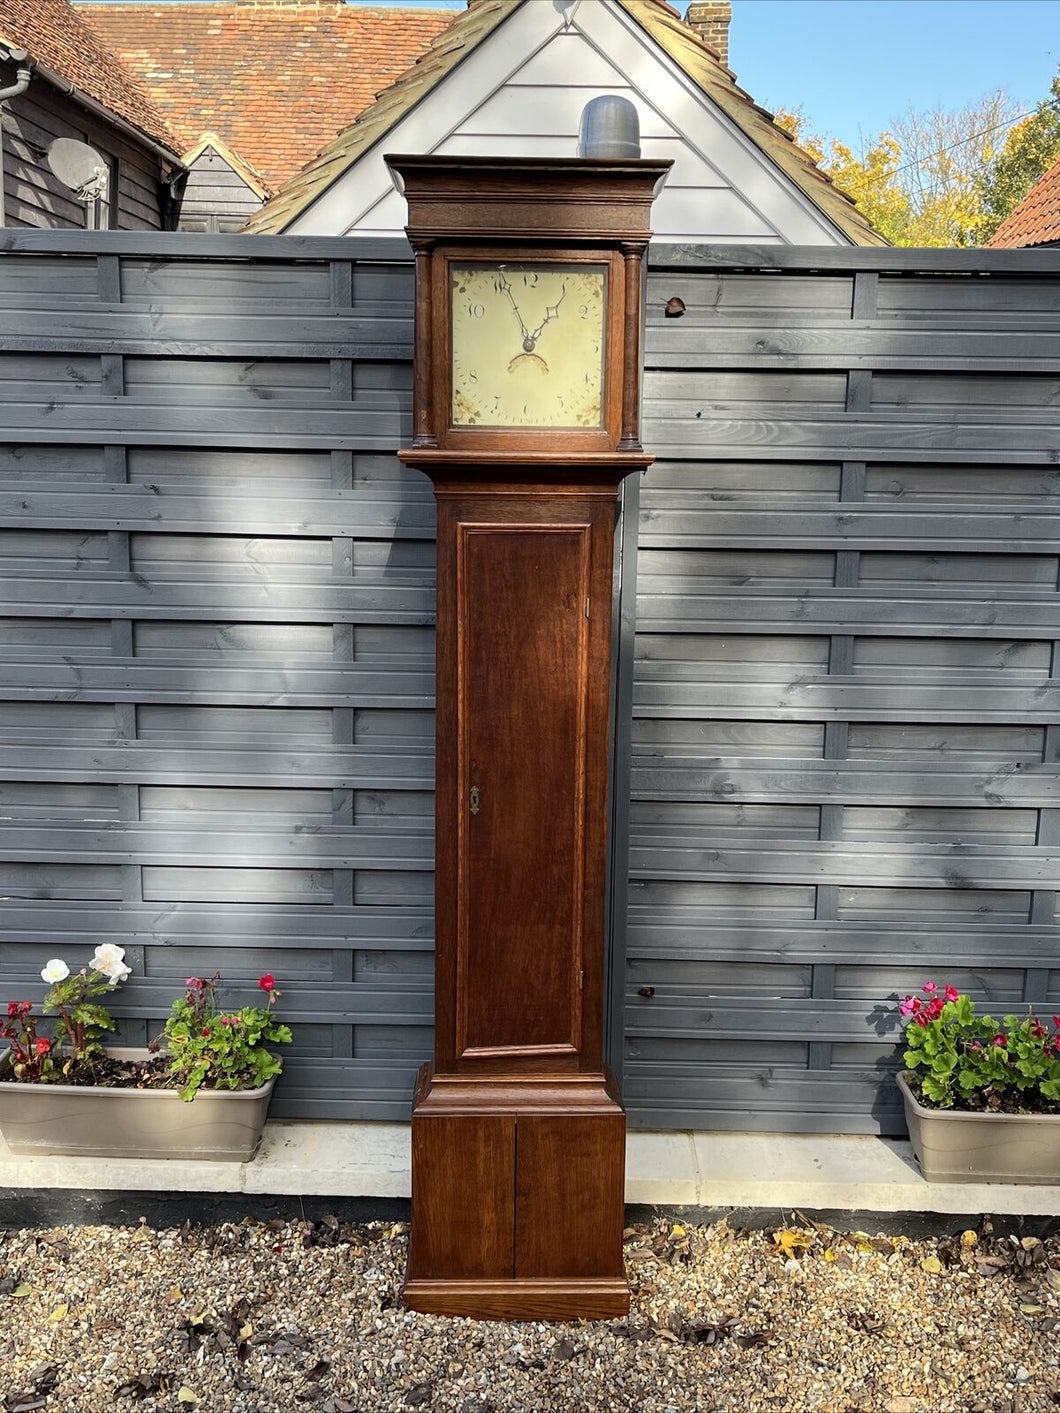 Bury St Edmonds Oak Longcase clock.